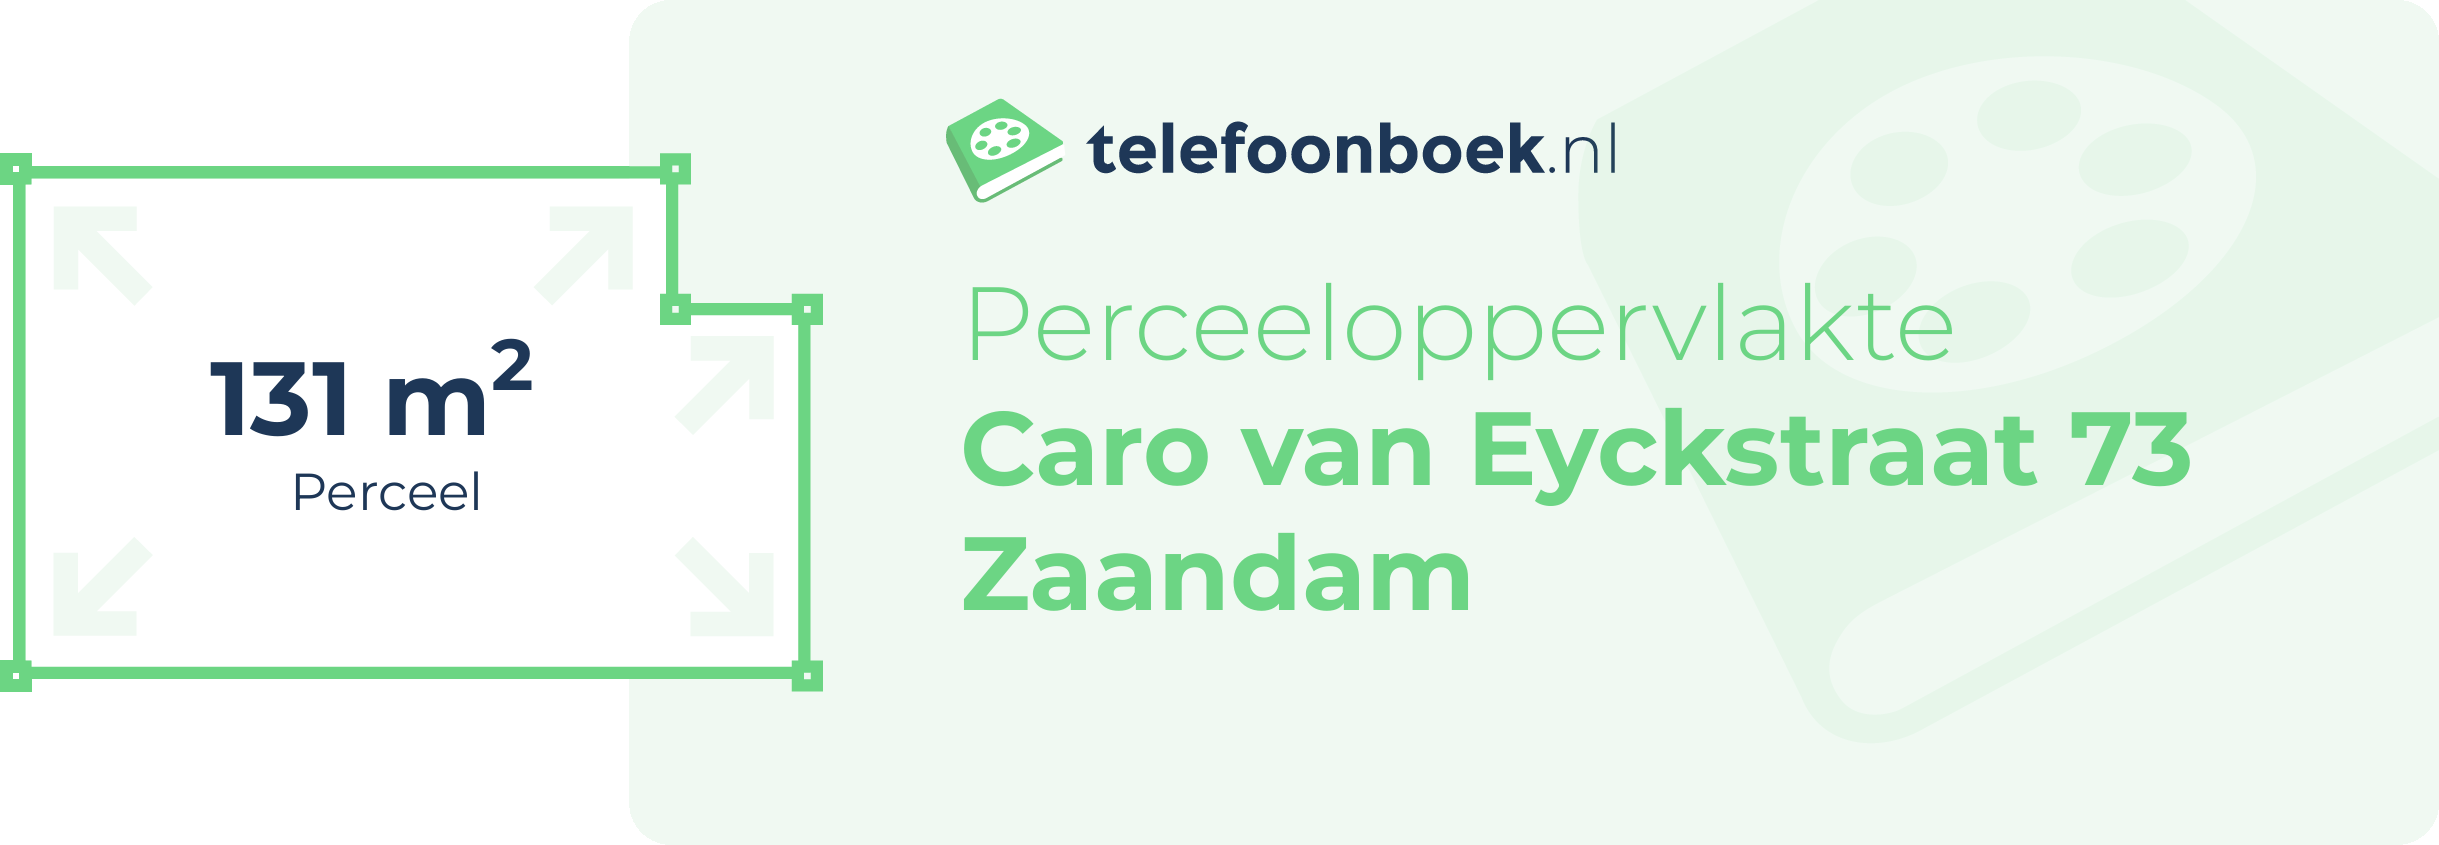 Perceeloppervlakte Caro Van Eyckstraat 73 Zaandam